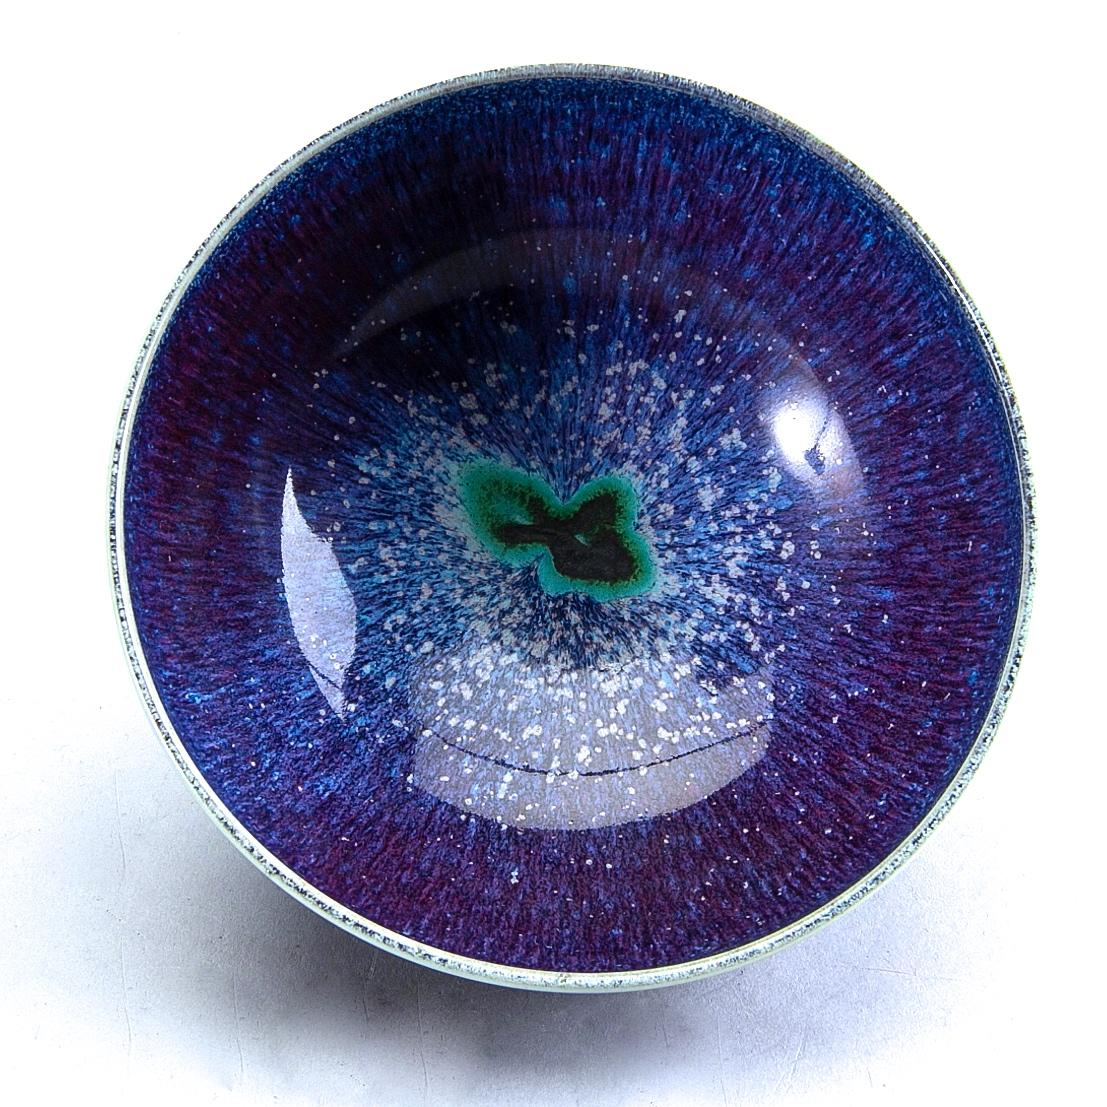 Berndt Friberg (1899-1981) studio large ceramic bowl or vide poche, modern Swedish design for Gustavsberg.
Unique, handmade.
Amazing glaze in blue / green / purple nuances.
Signed with incised marks.